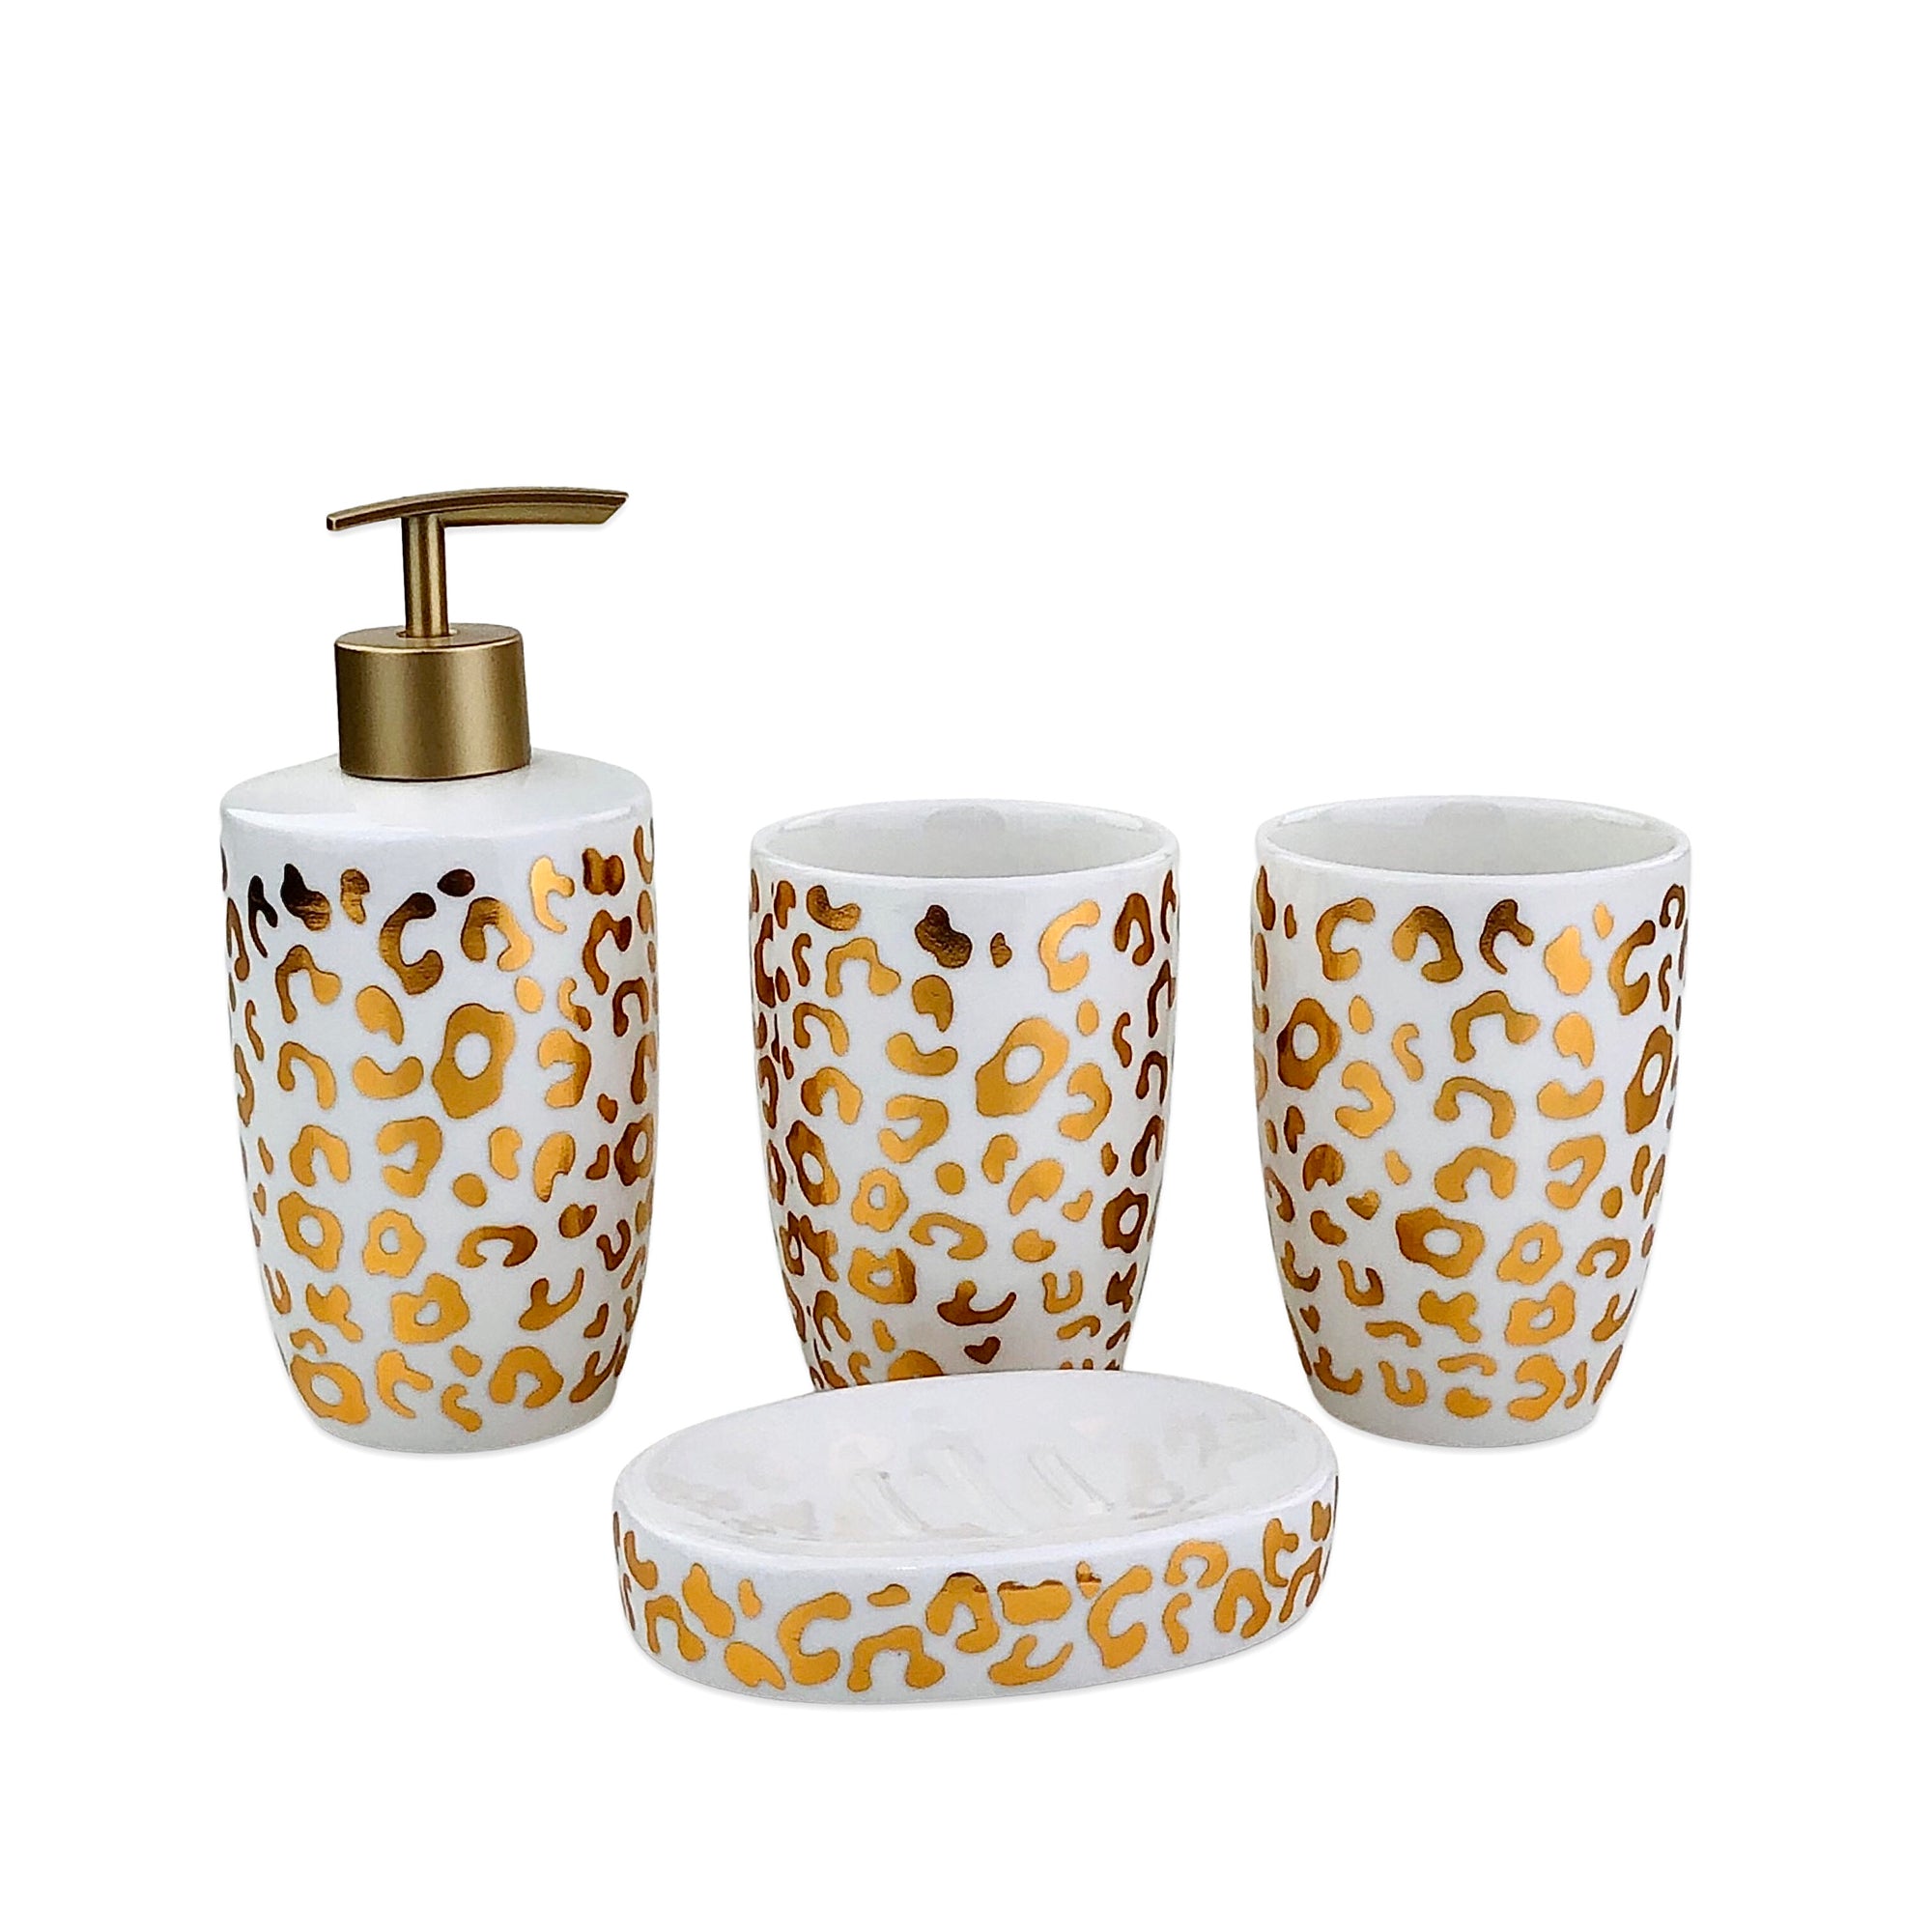 Golden Cheetah Print Bath Set